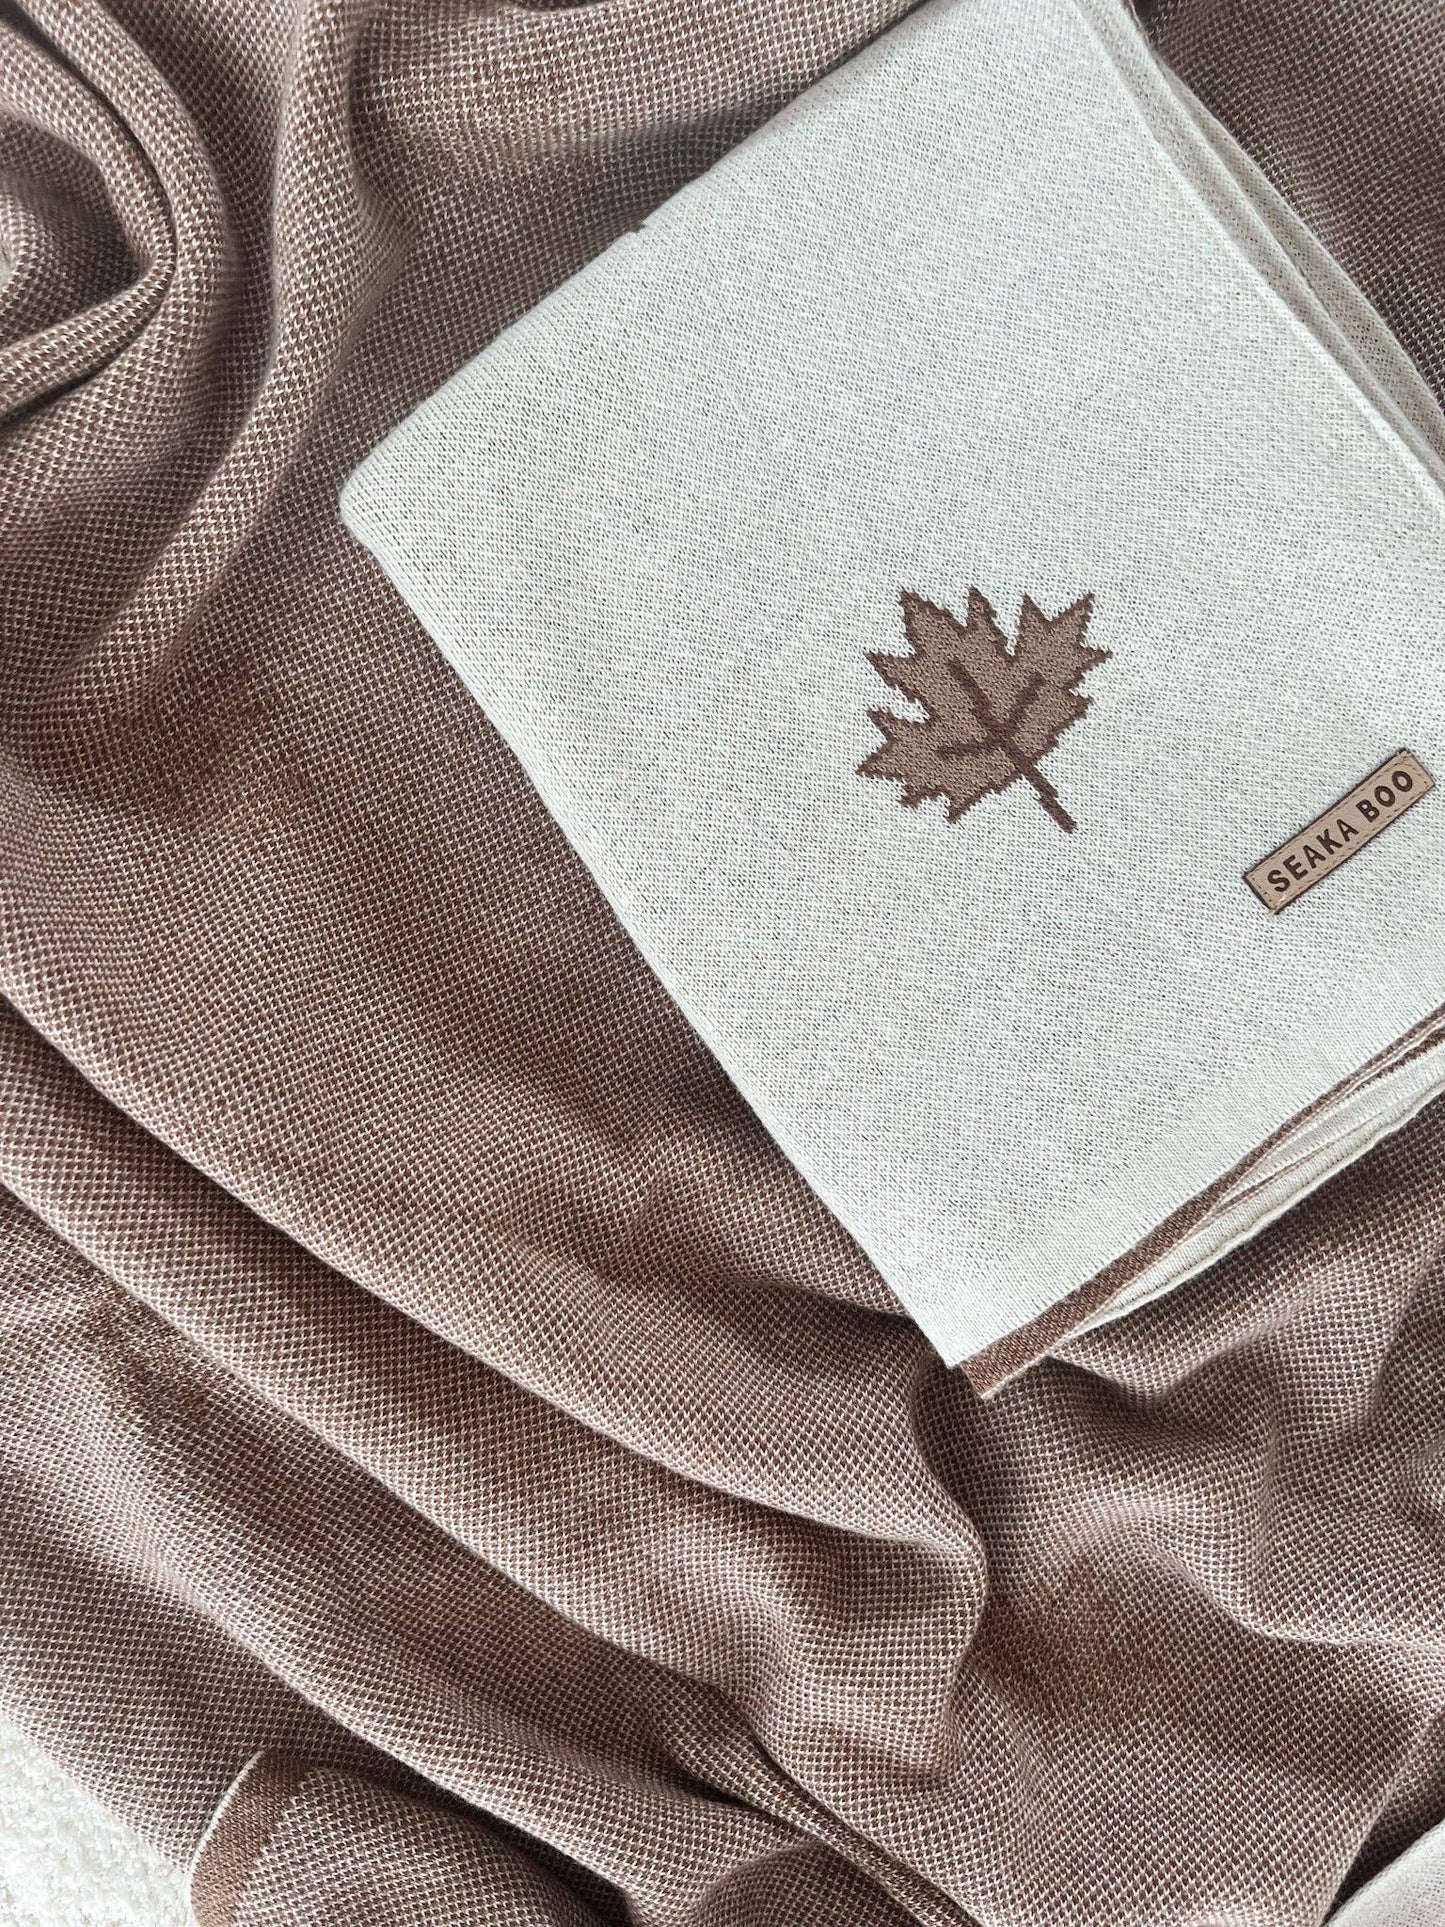 BeiBi Blanket -  Maple